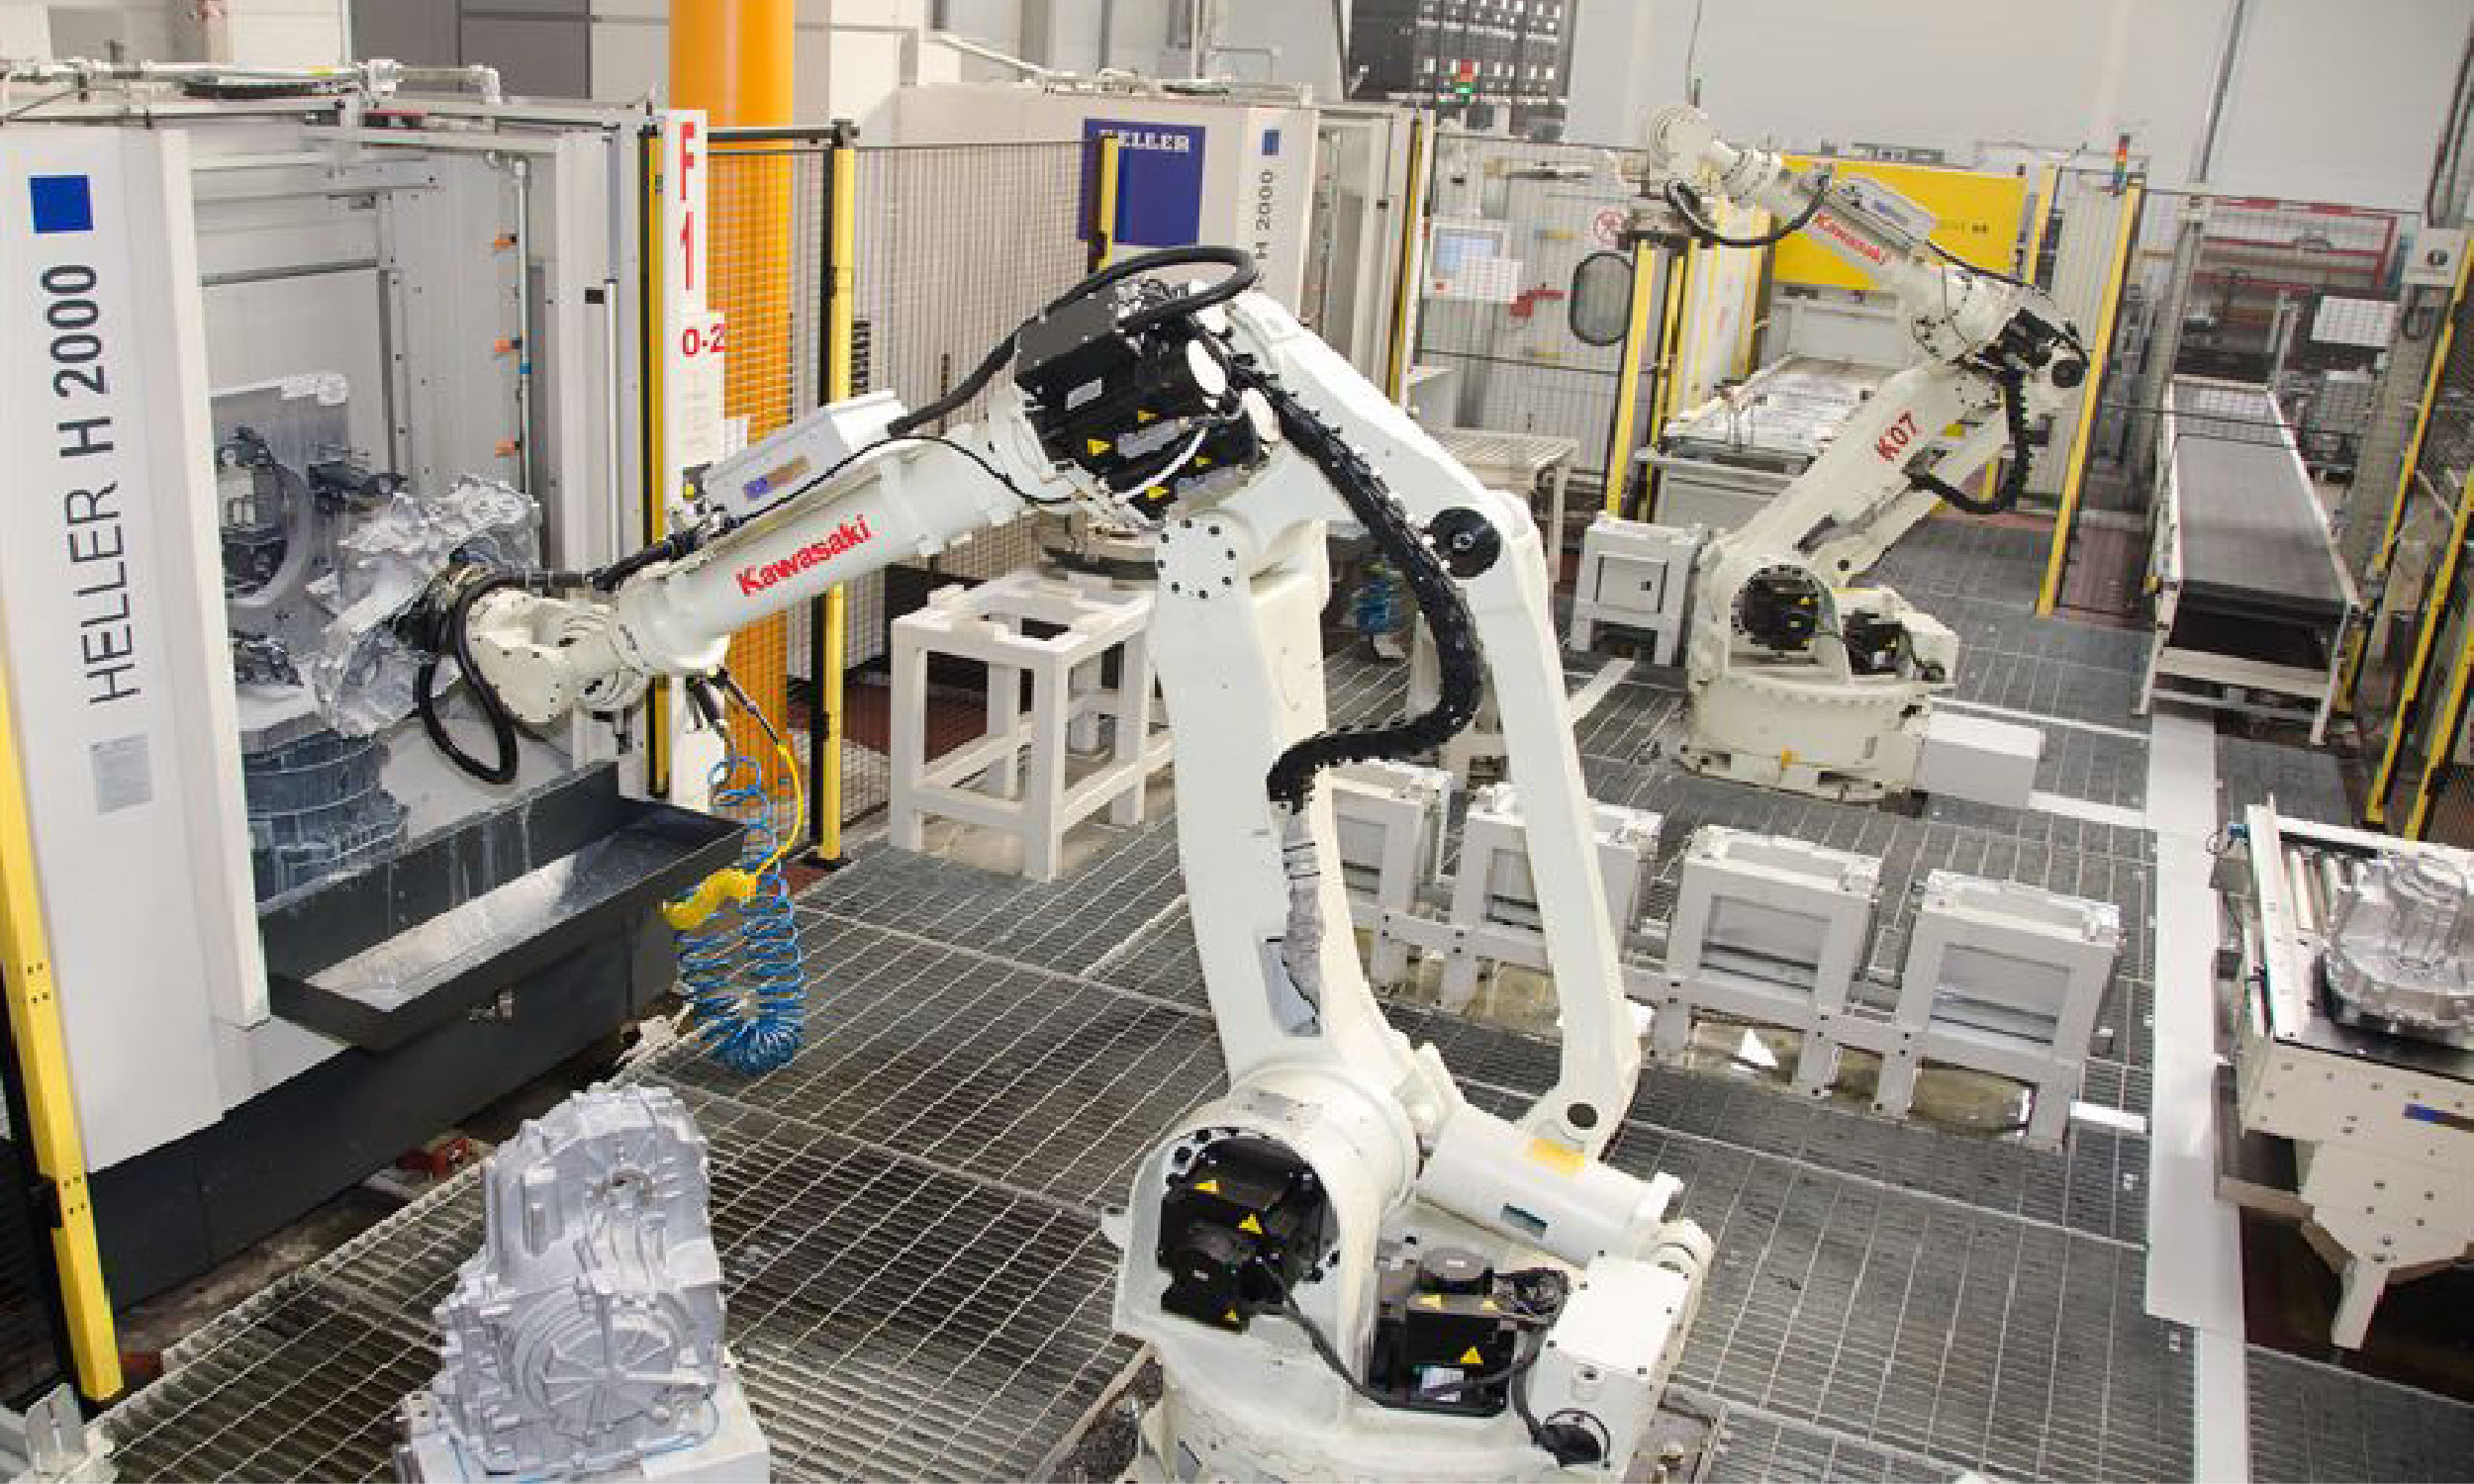 kawasaki robotic automation in a manufacturing factory